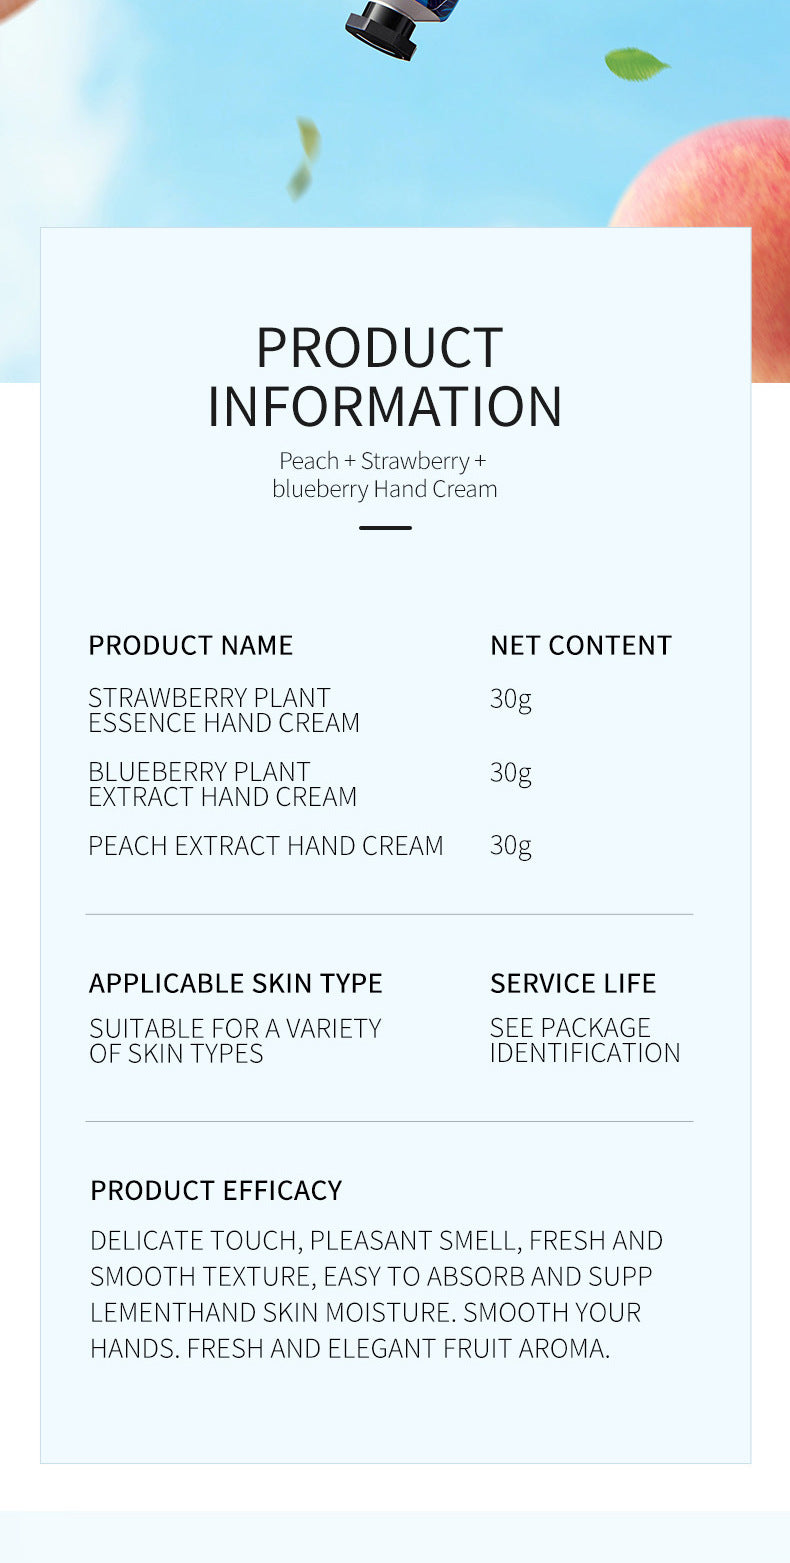 Wholesale Moisturizing and Tender Grapefruit Hand Cream, Private Label Hand Cream OEM Factory 433